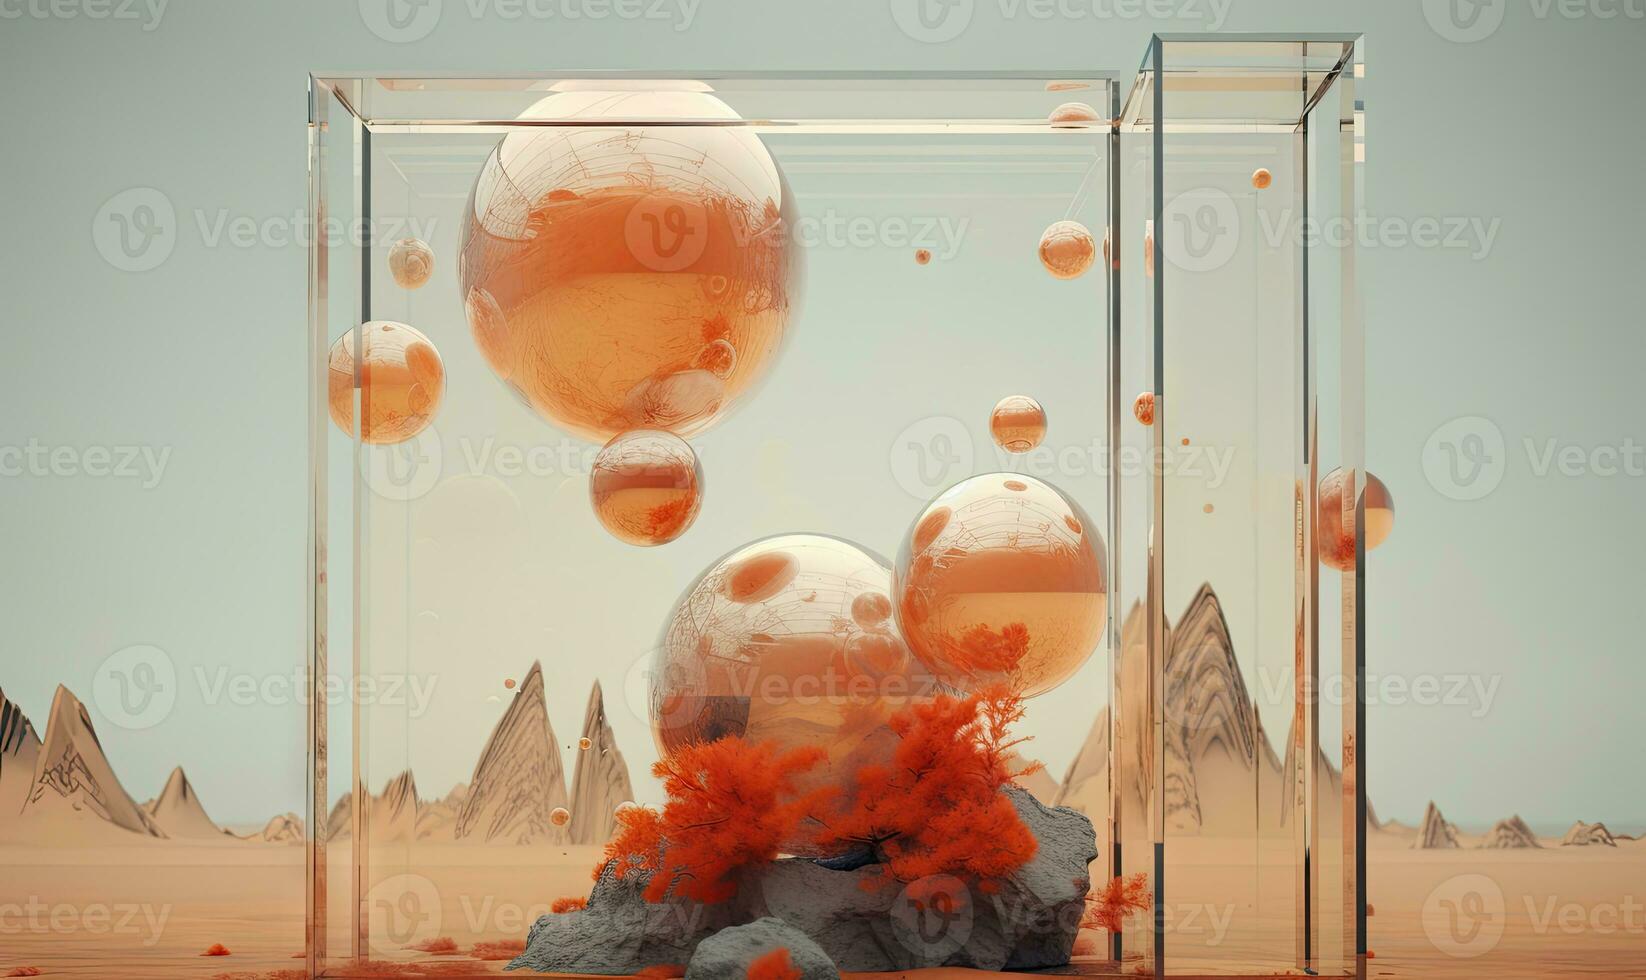 Orderly arranged orange spheres inside a glass enclosure on a rocky base. AI Generative photo